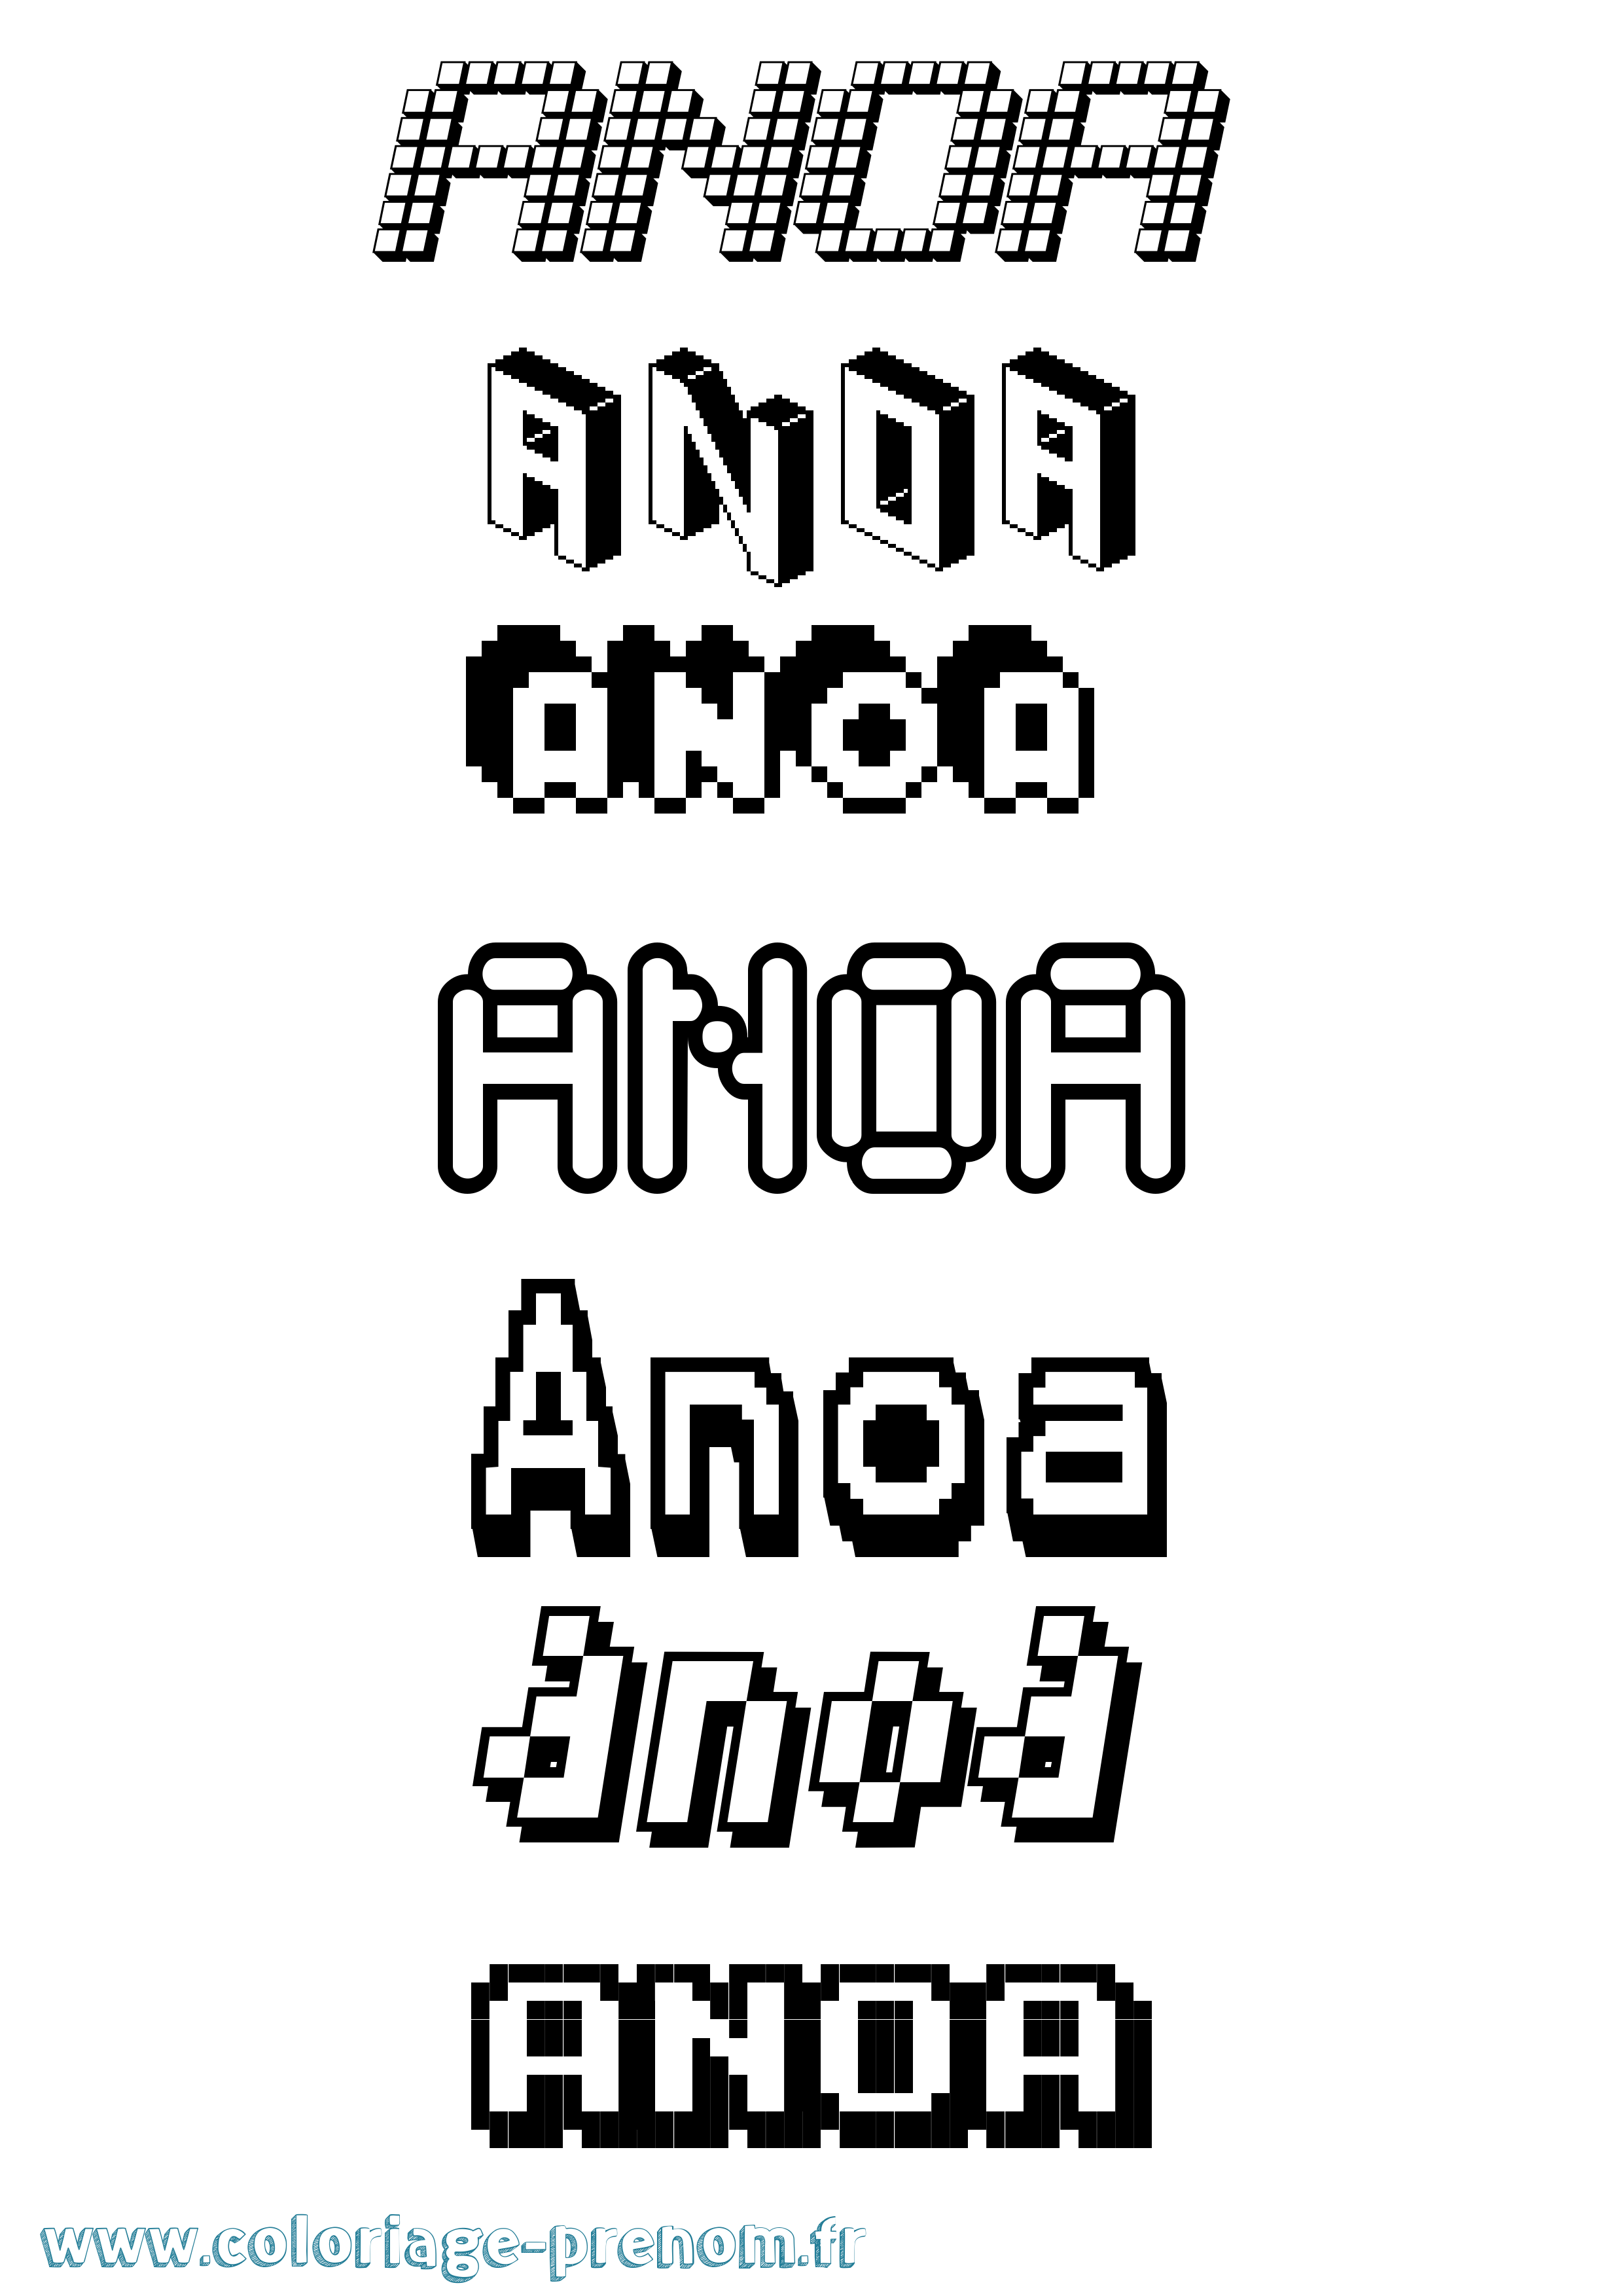 Coloriage prénom Anoa Pixel